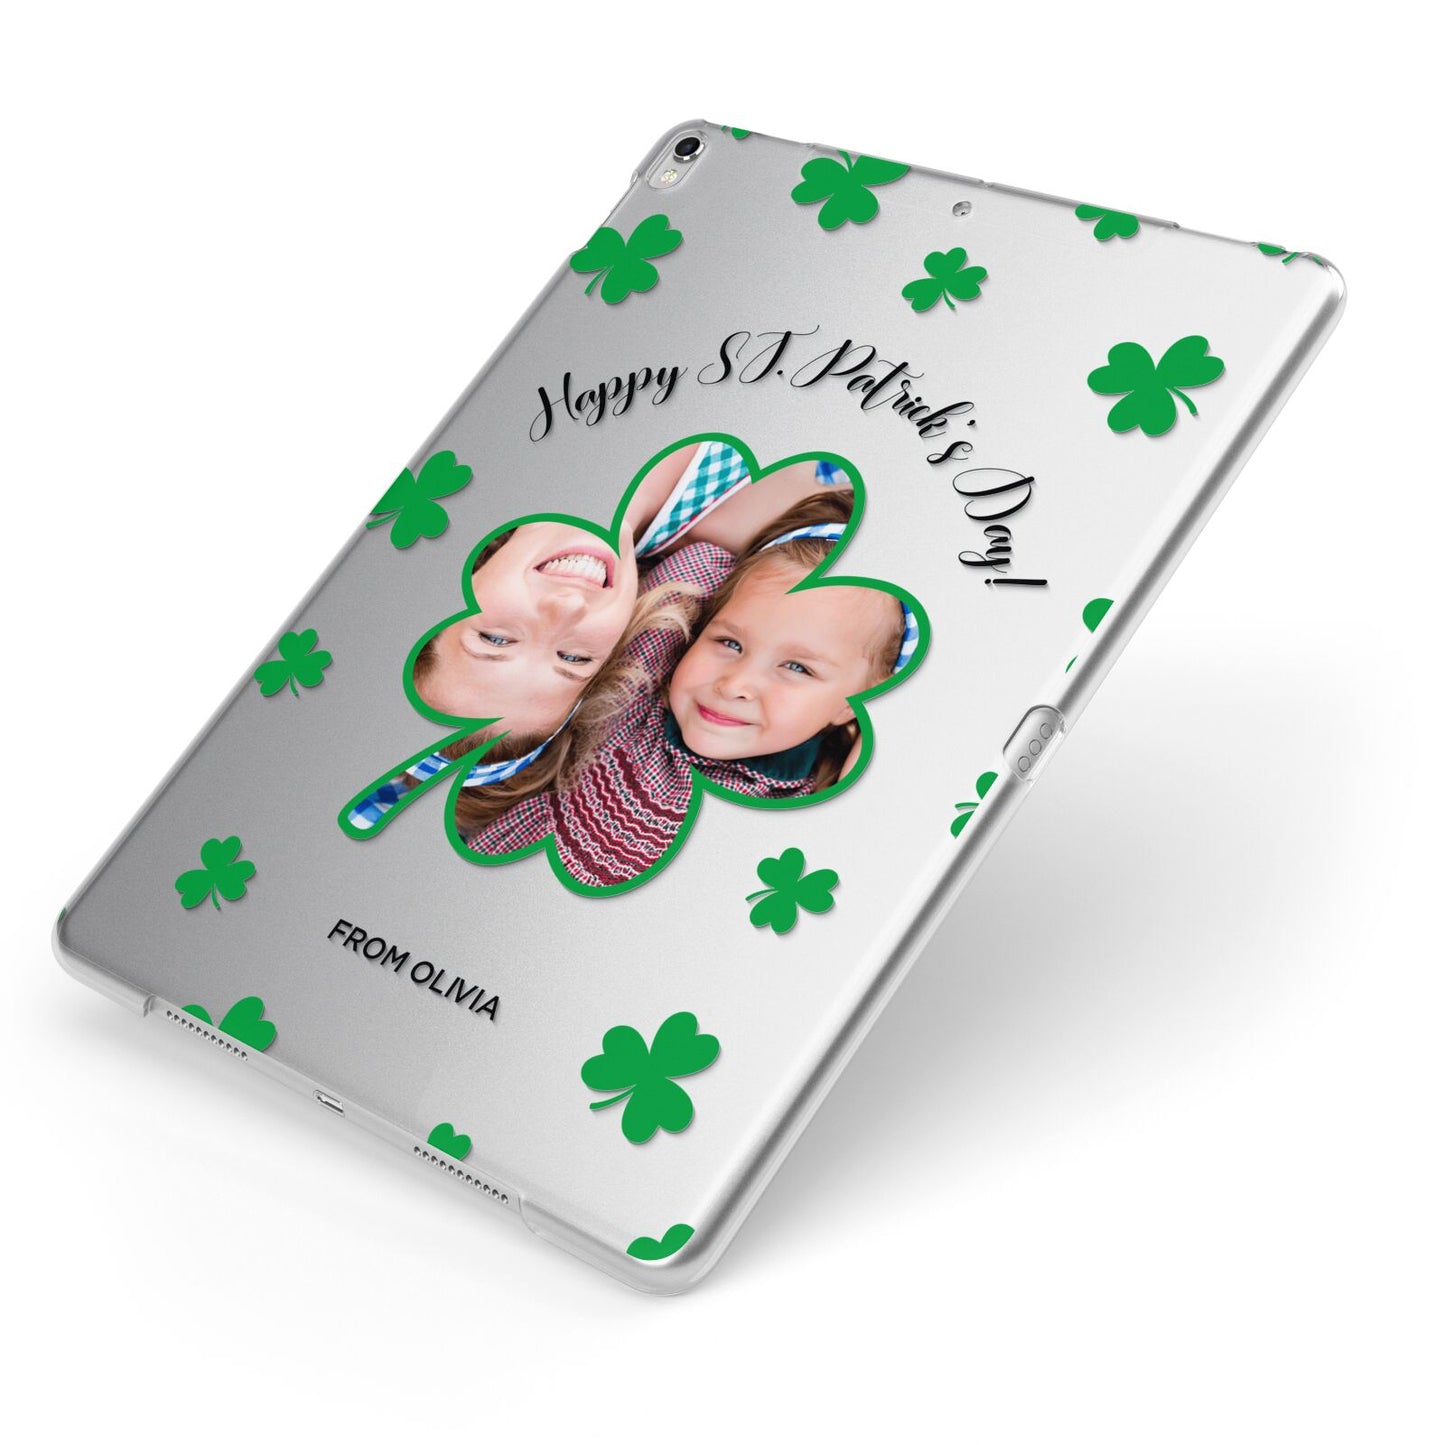 St Patricks Day Photo Upload Apple iPad Case on Silver iPad Side View